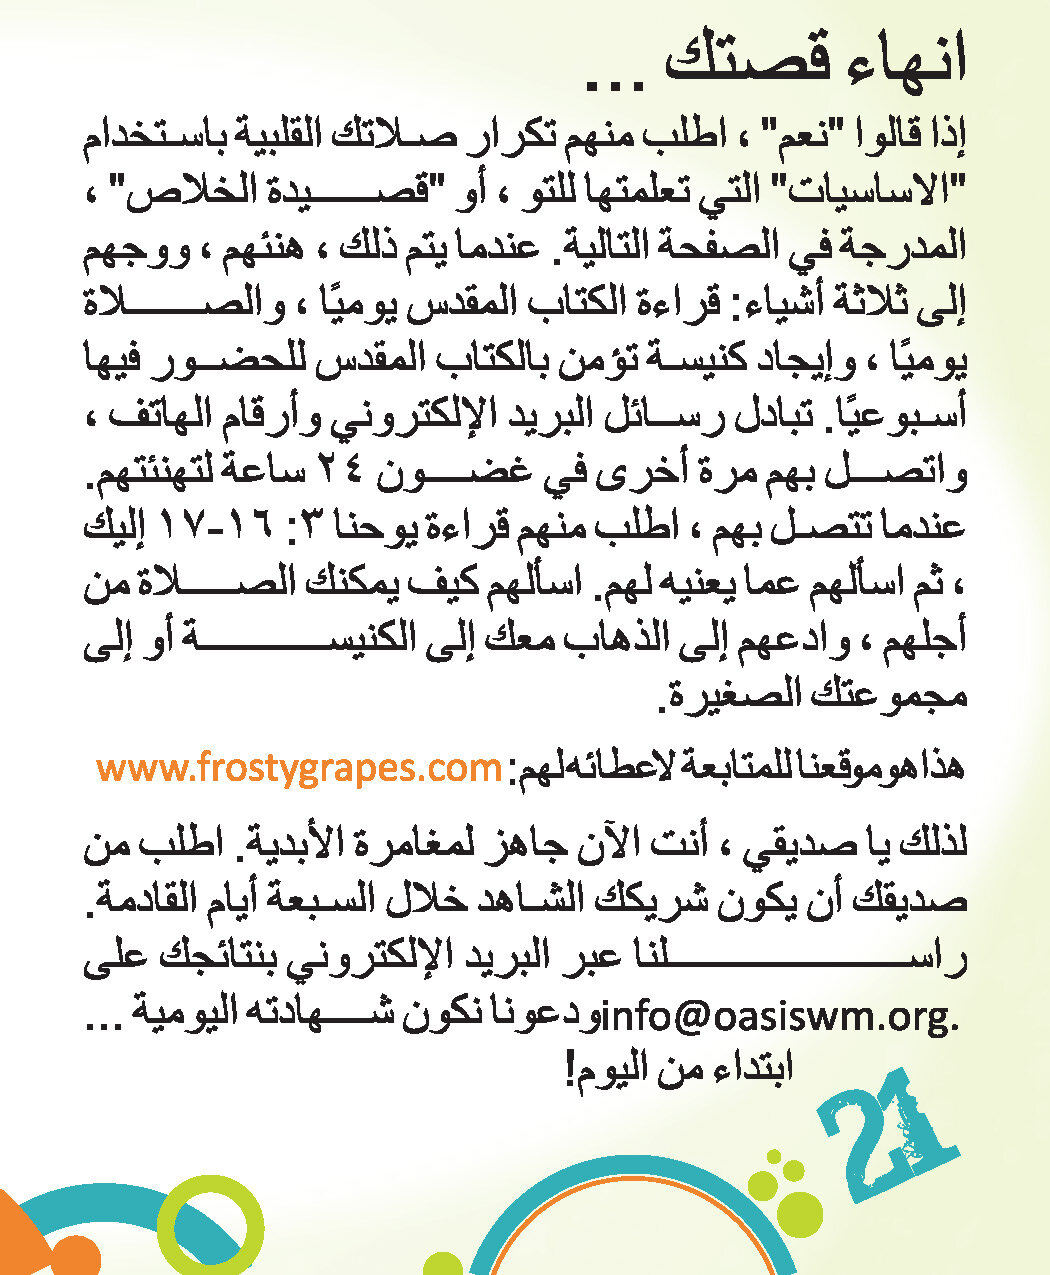 Arabic_Zubi_CDR-based_Page_21.jpg